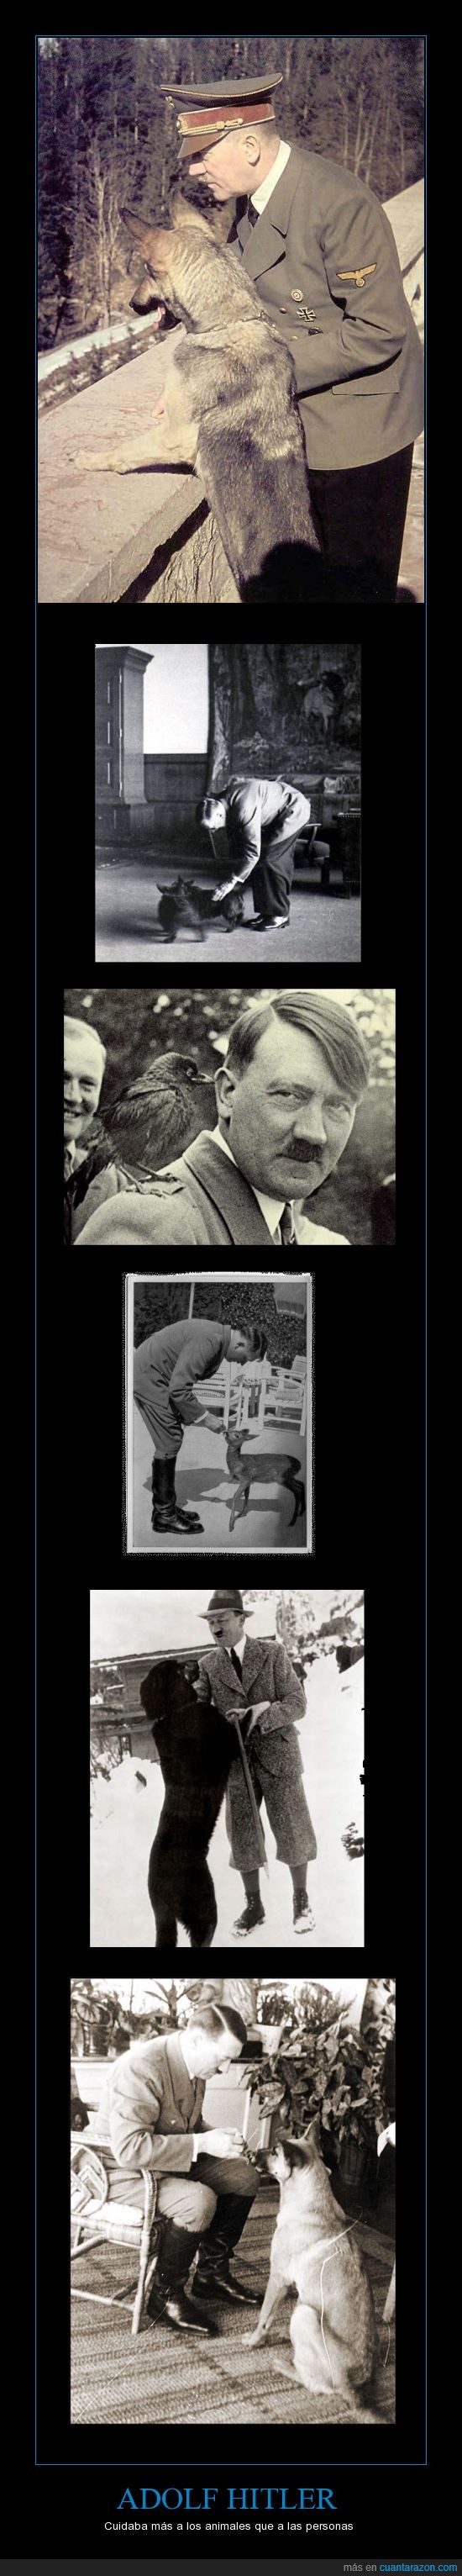 Hitler,animales,perro,amante,vegetariano,persona,odiar